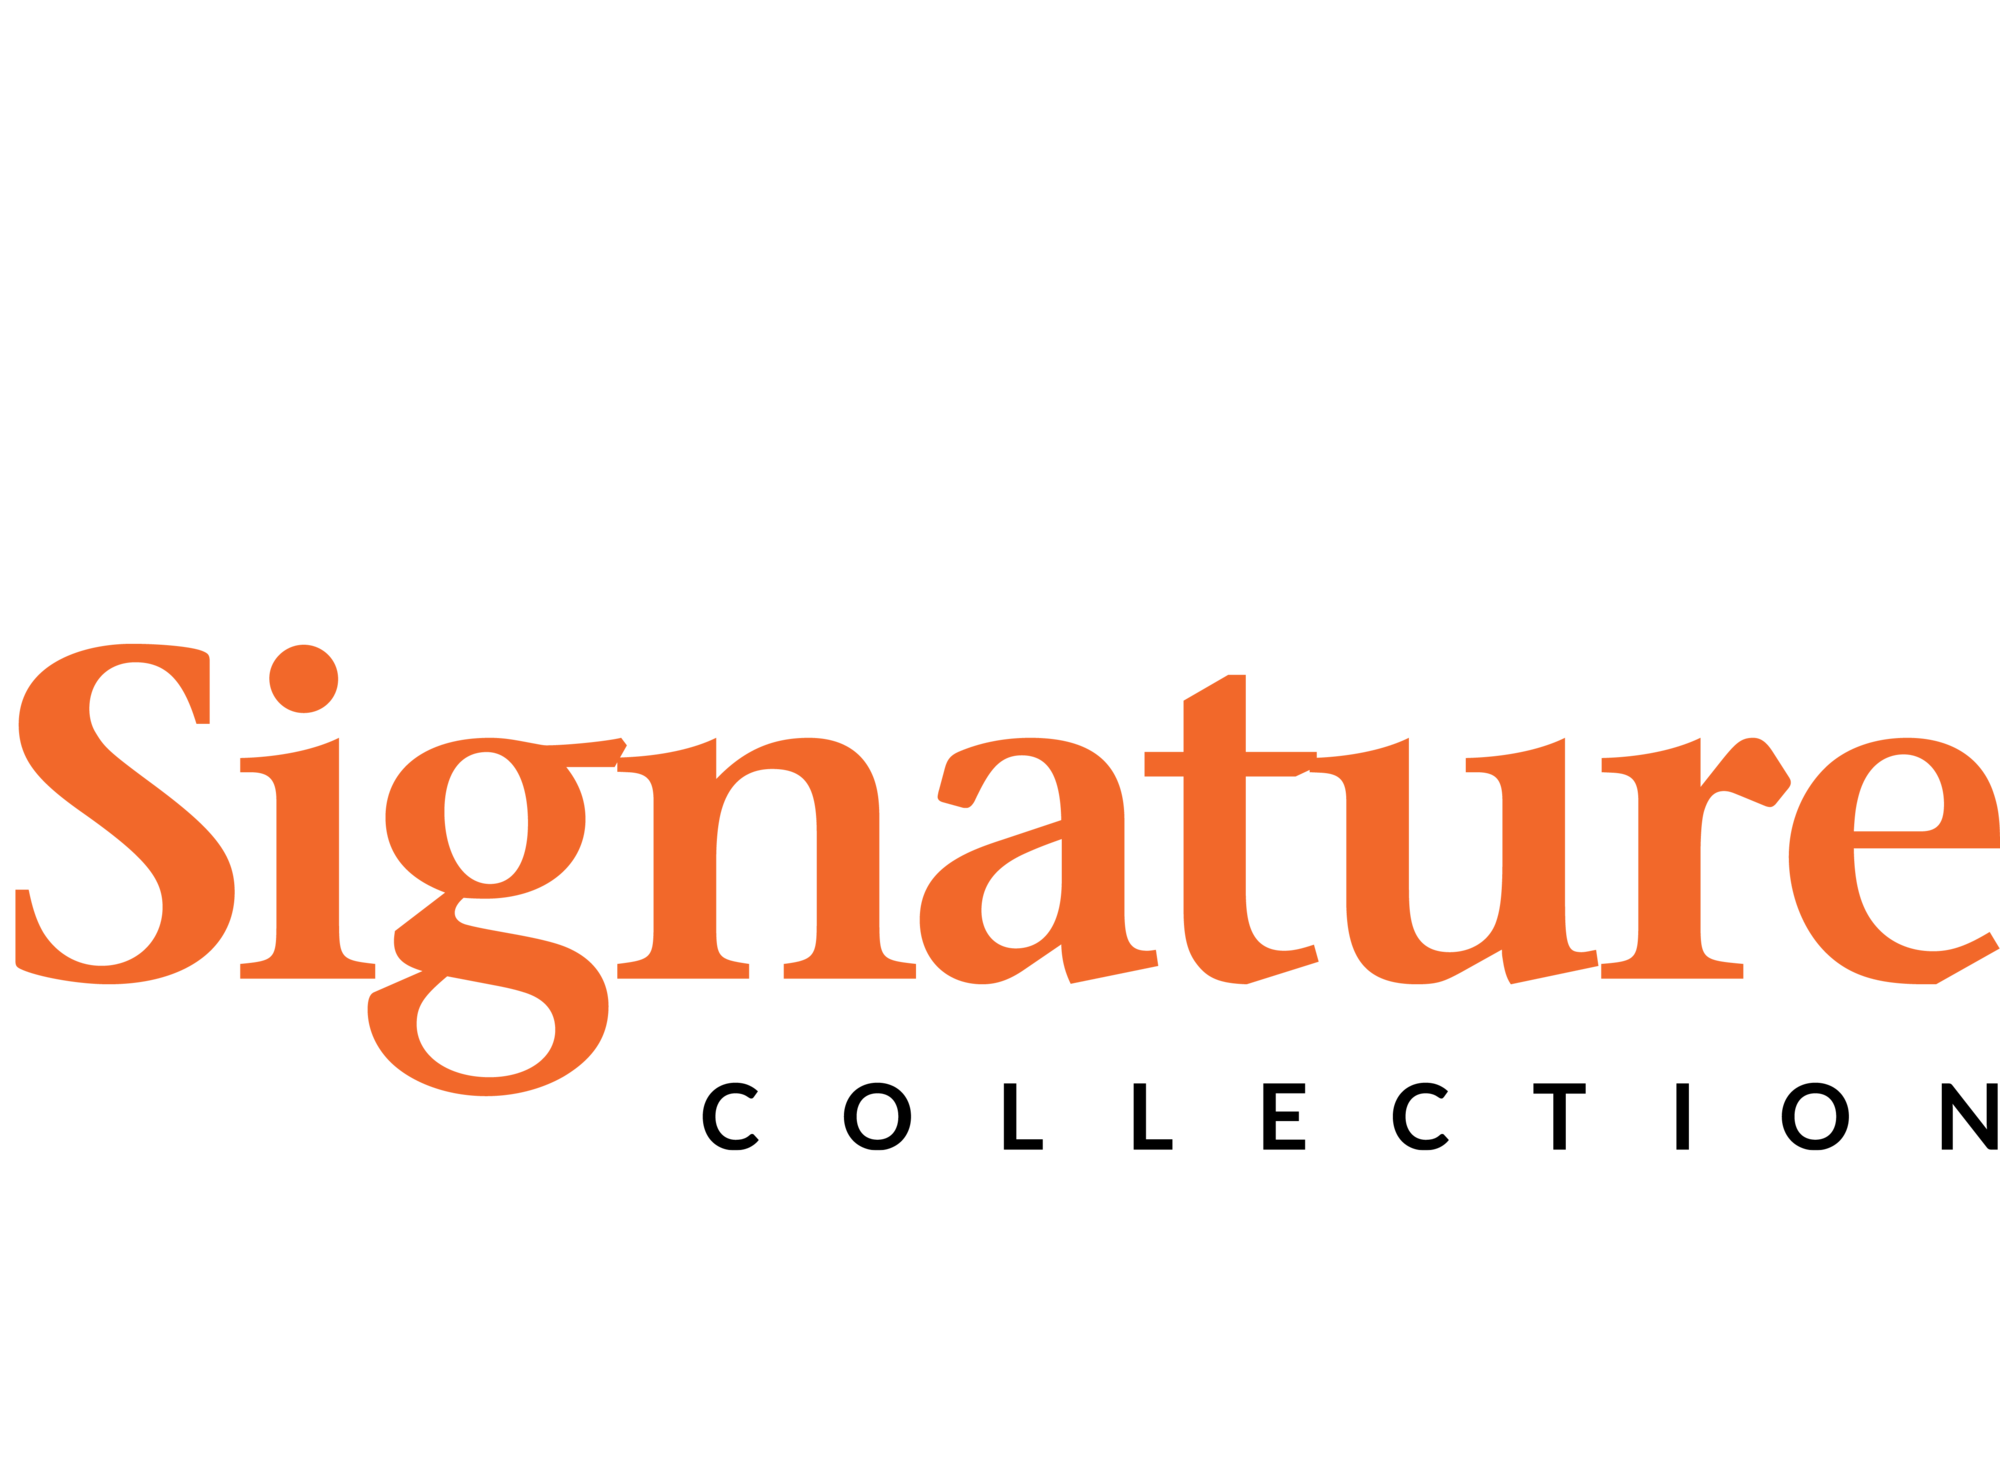 Signature Collection logo